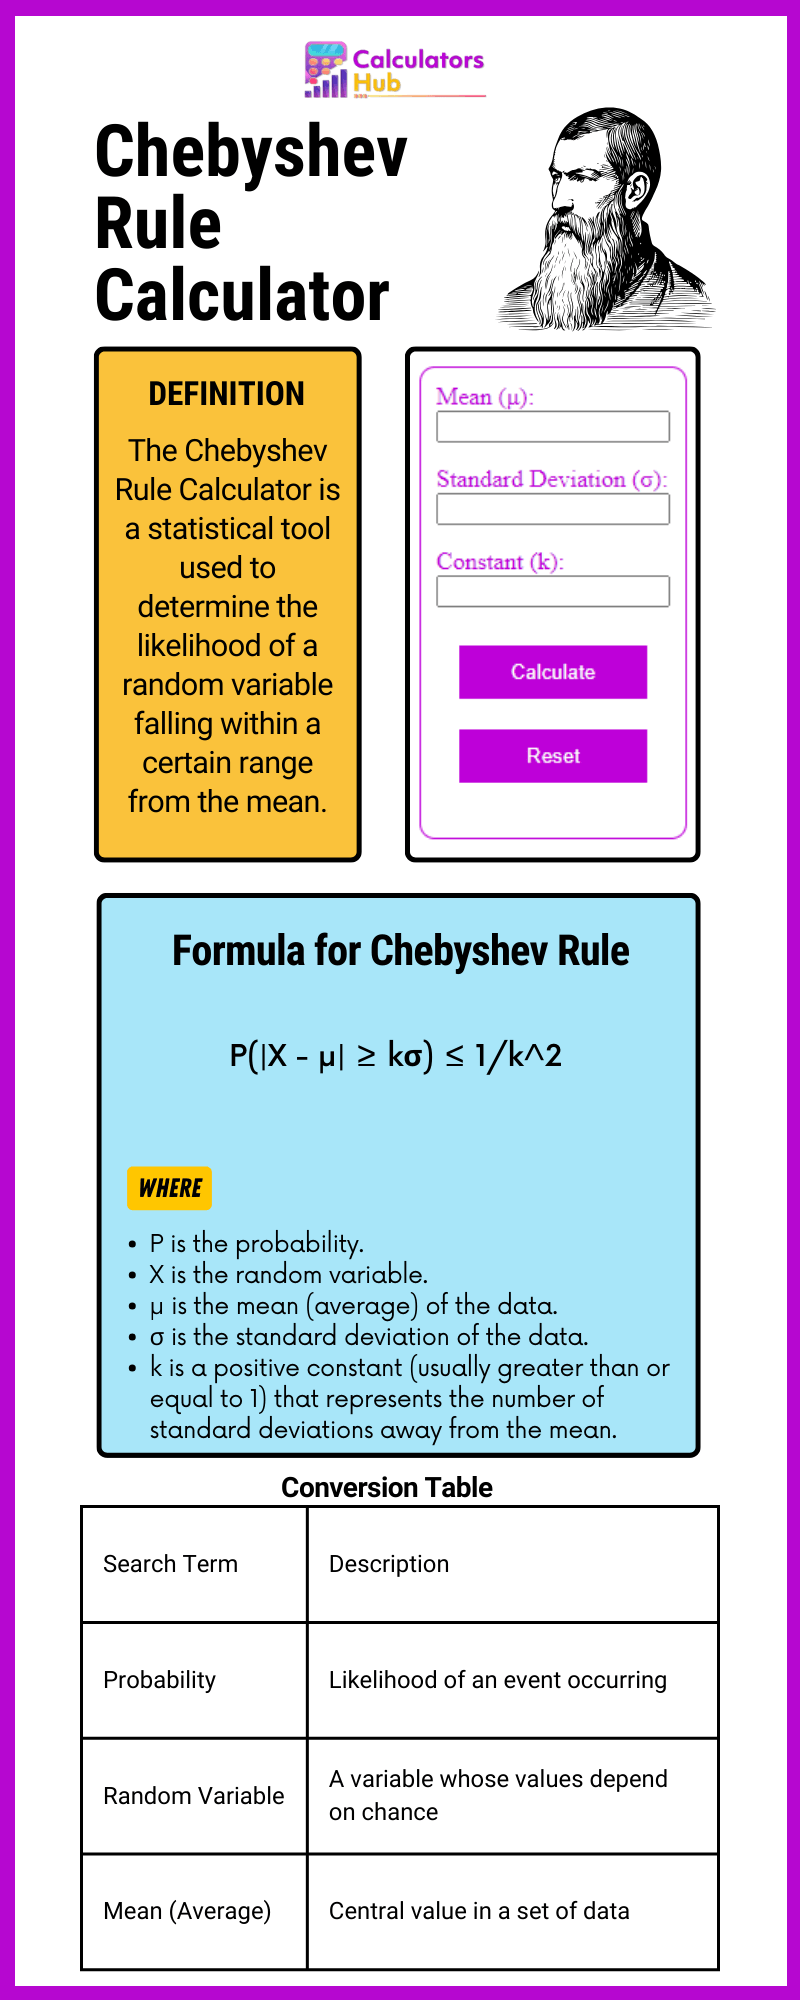 Chebyshev Rule Calculator